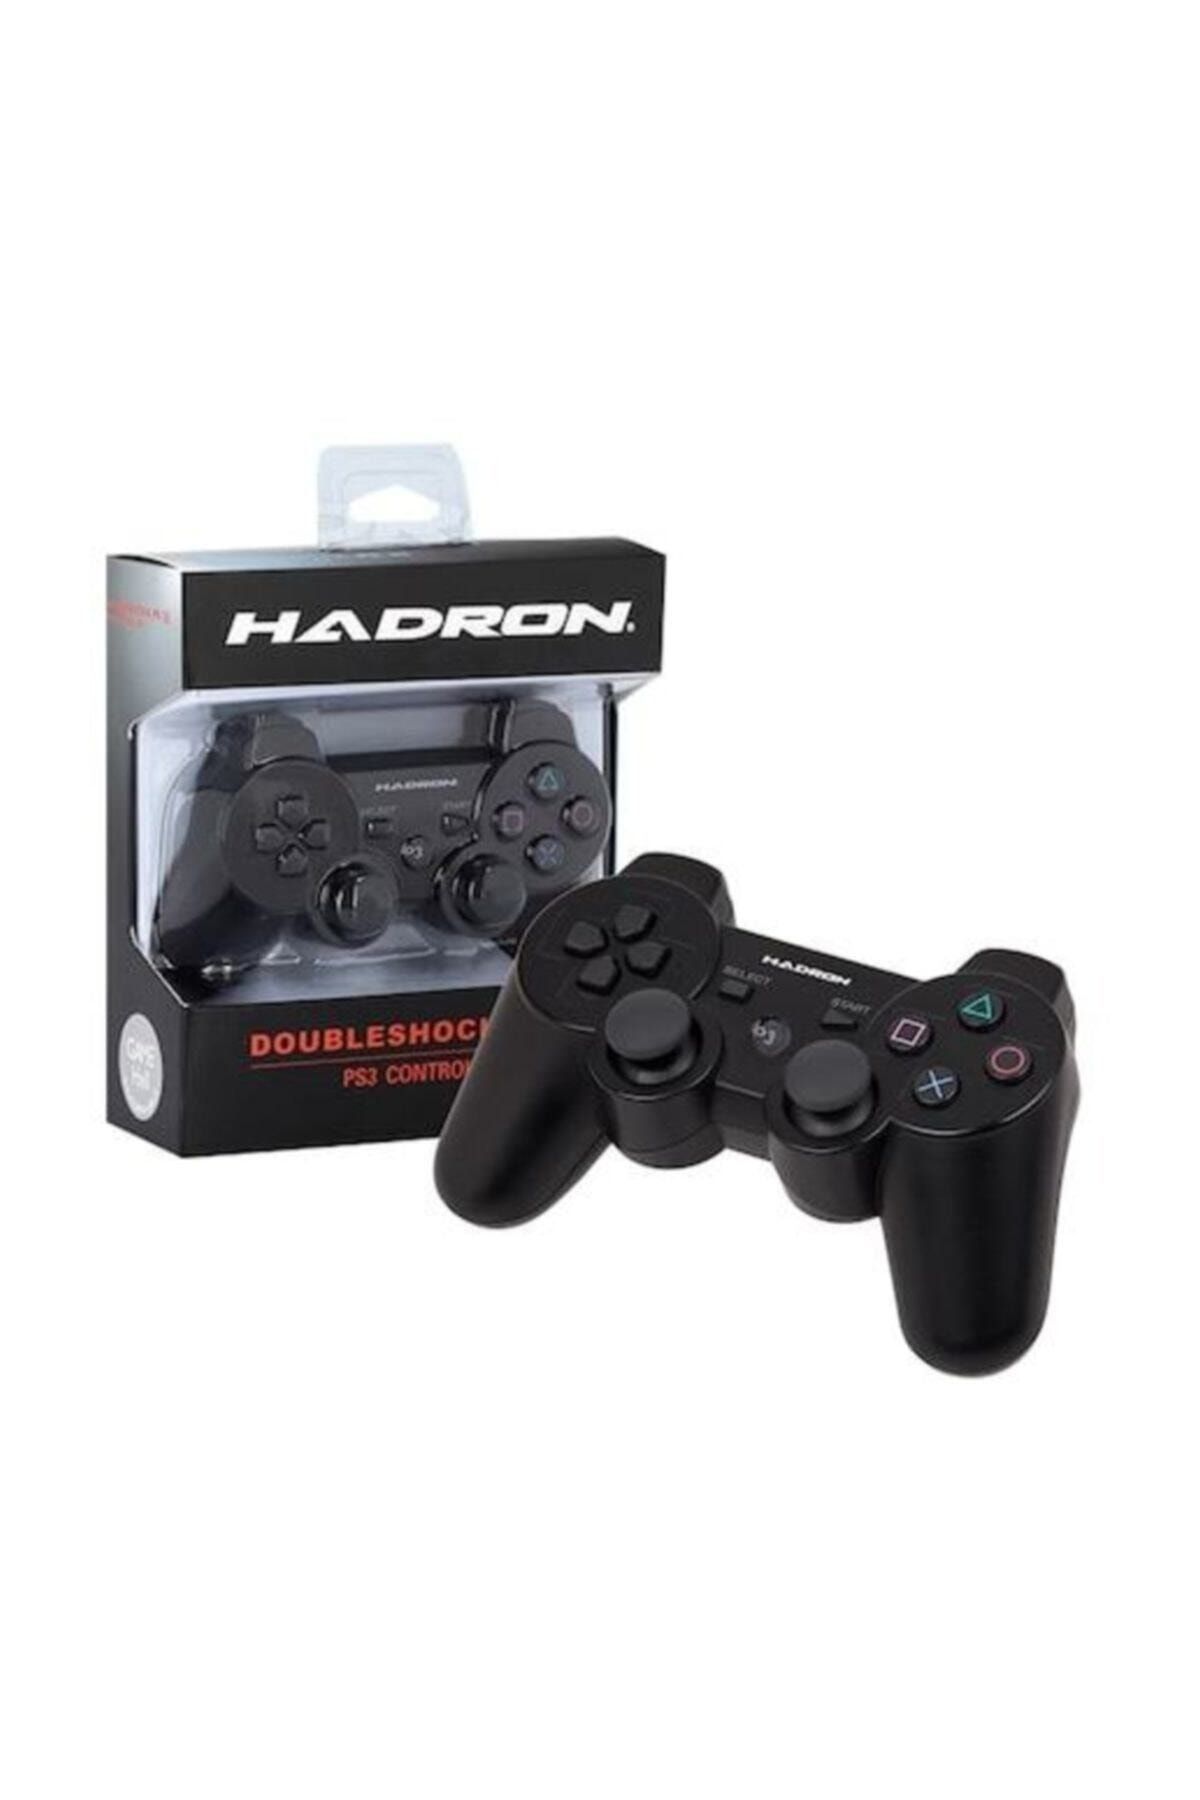 hadron hd 306 oyun kolu game pad kablosuz ps3 buletooth siyah fiyati yorumlari trendyol